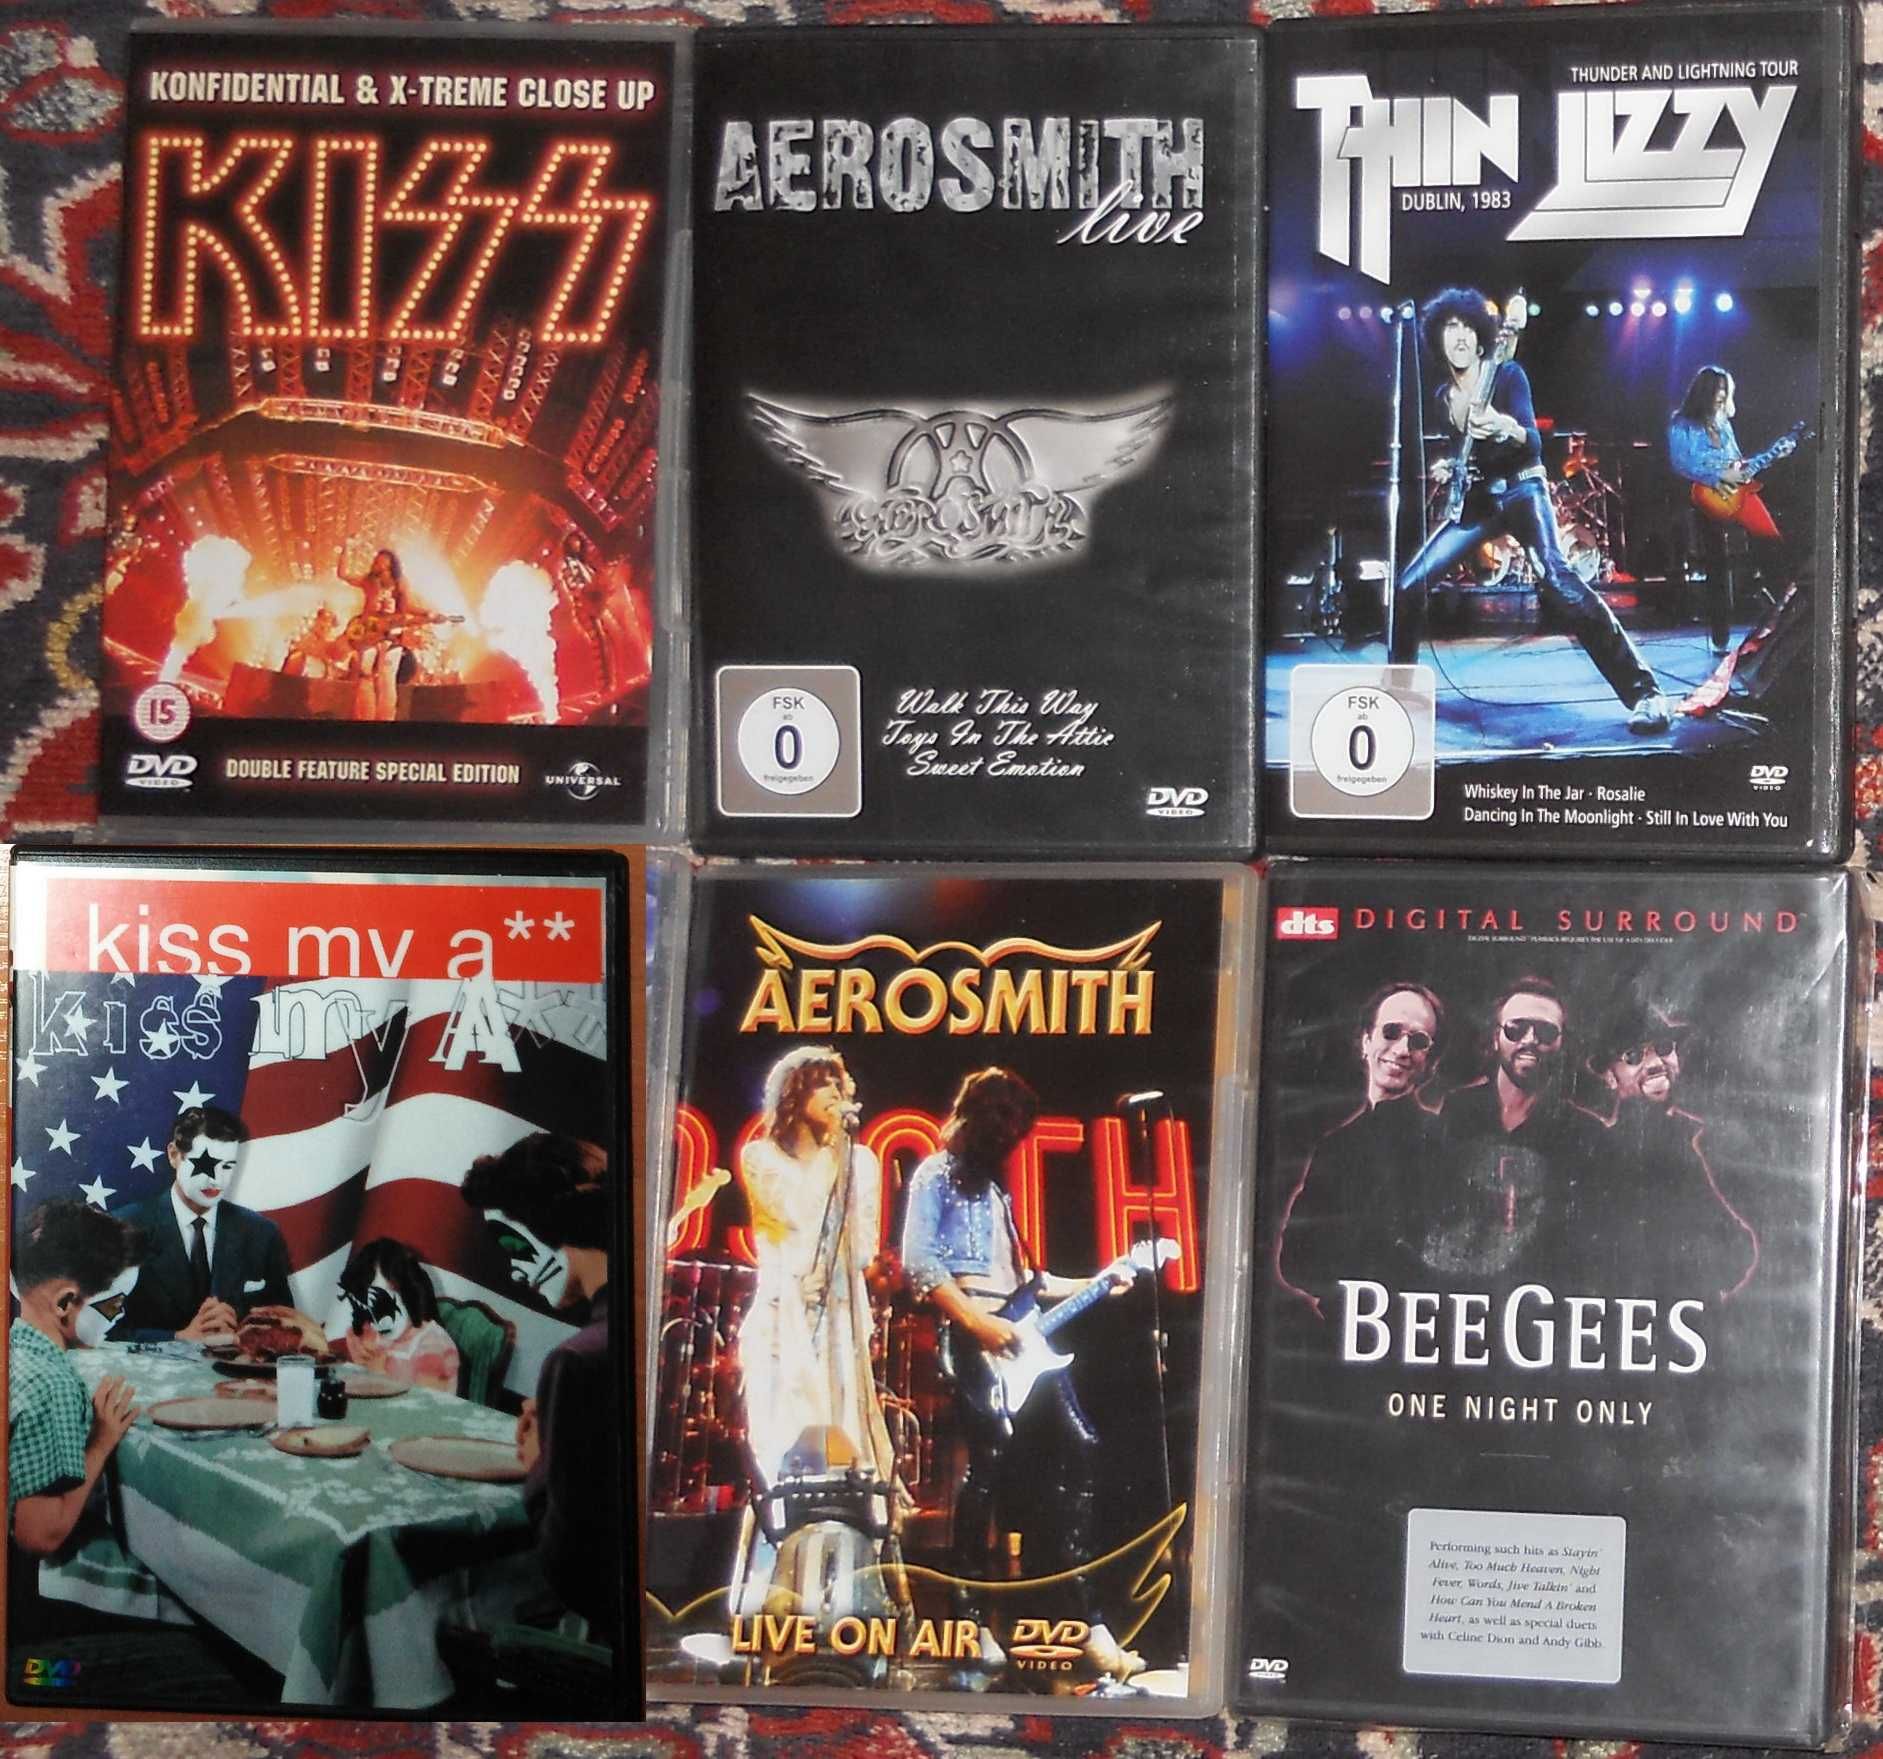 DVD-Bon Jovi,Genesis,Aerosmith,The Who,Kiss